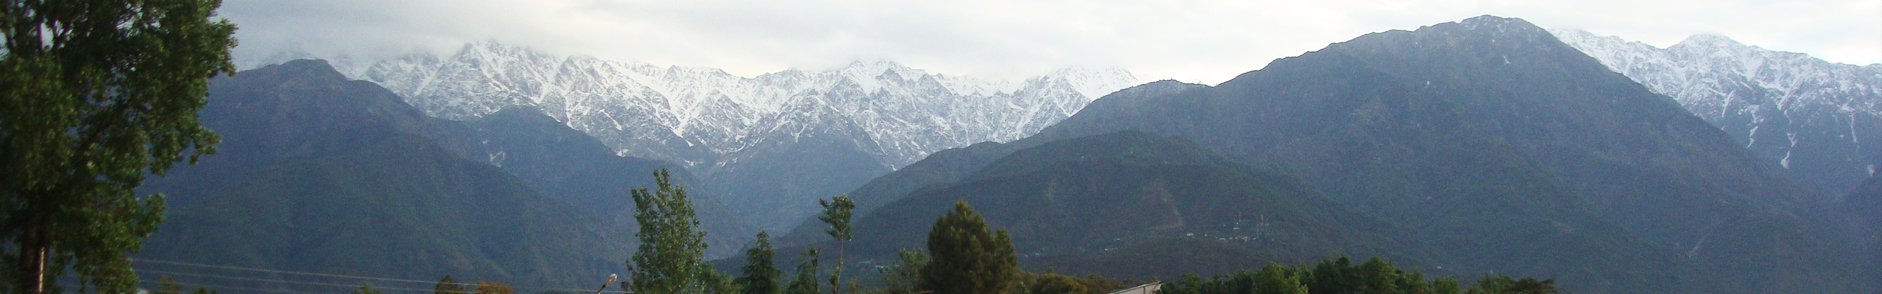 Langha Mata Palampur, Himachal